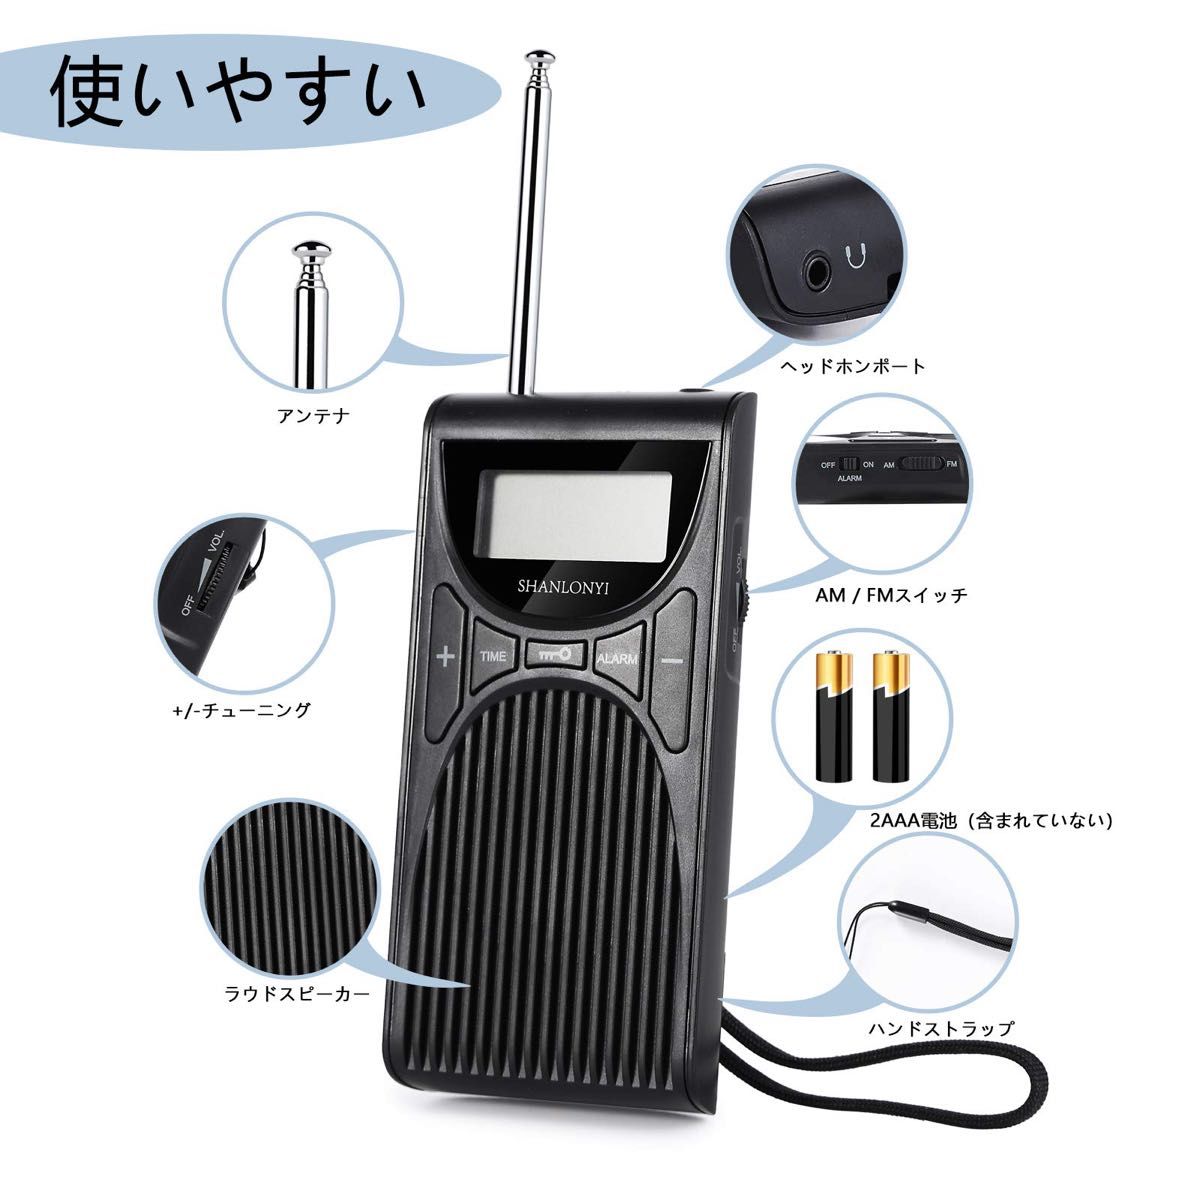 SHANLONYI ポータブルラジオ 小型 ポケットラジオ 高感度 防災 ミニラジオ FM/AM 乾電池式 目覚まし時計付き 時計